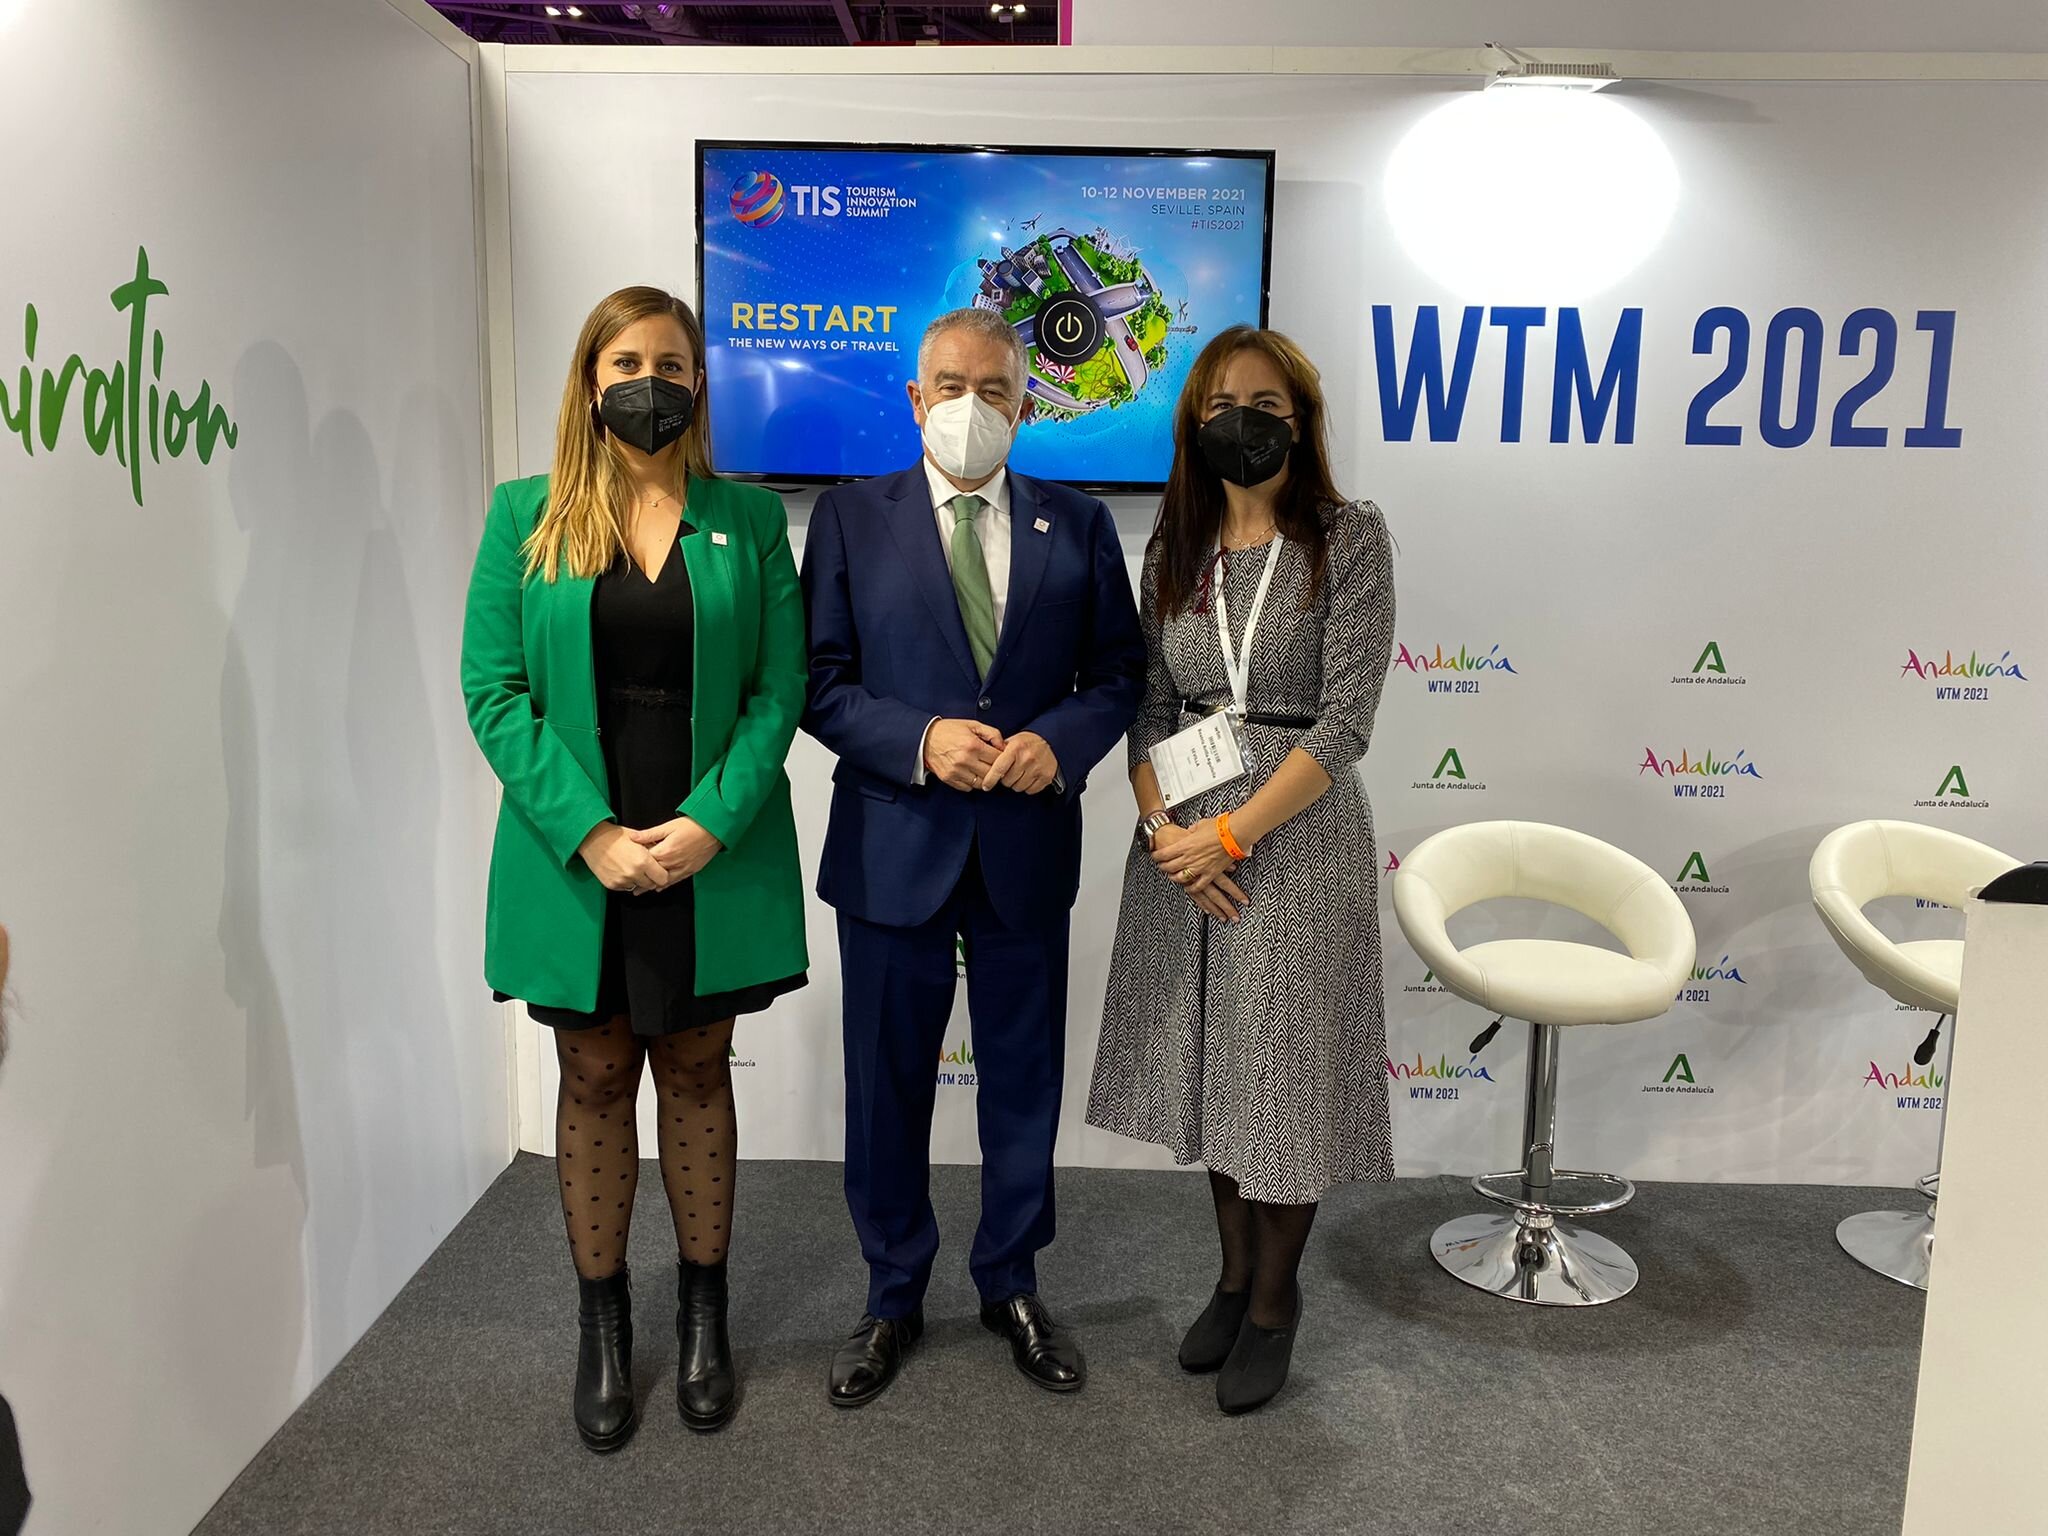 TIS - Tourism Innovation Summit 2021 presents “Restart the new ways of travel” at WTM London